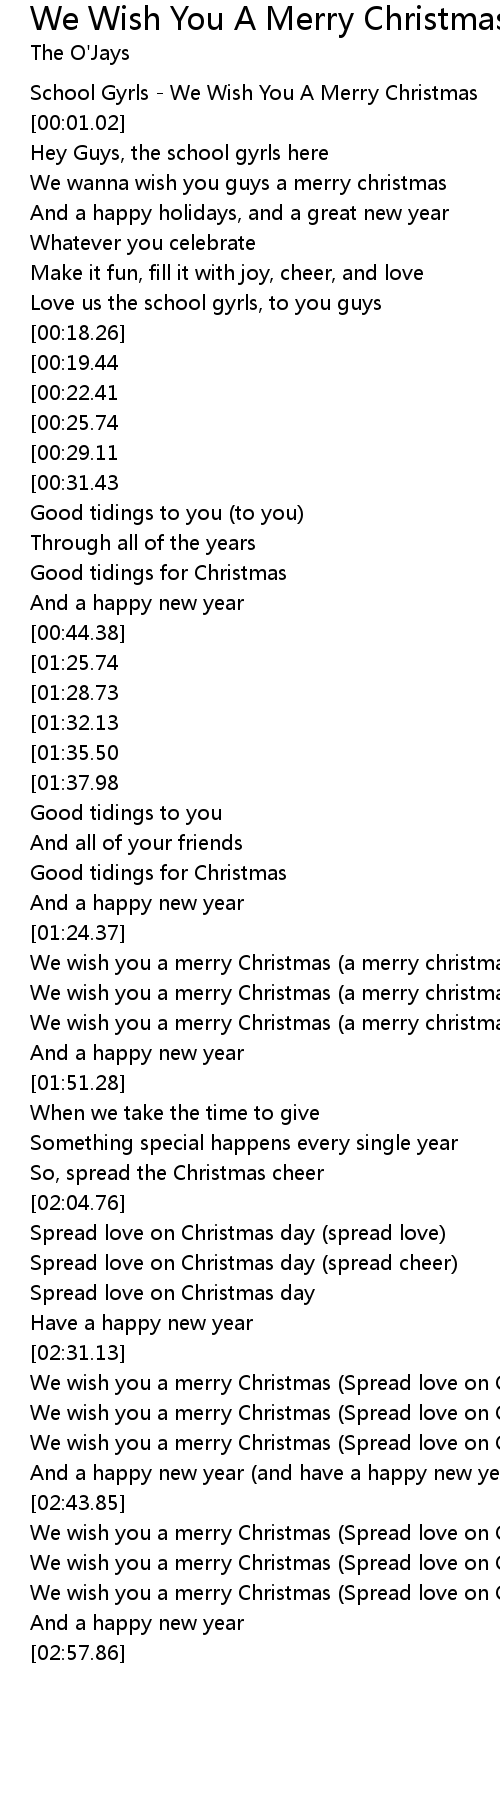 We Wish You A Merry Christmas Lyrics Follow Lyrics